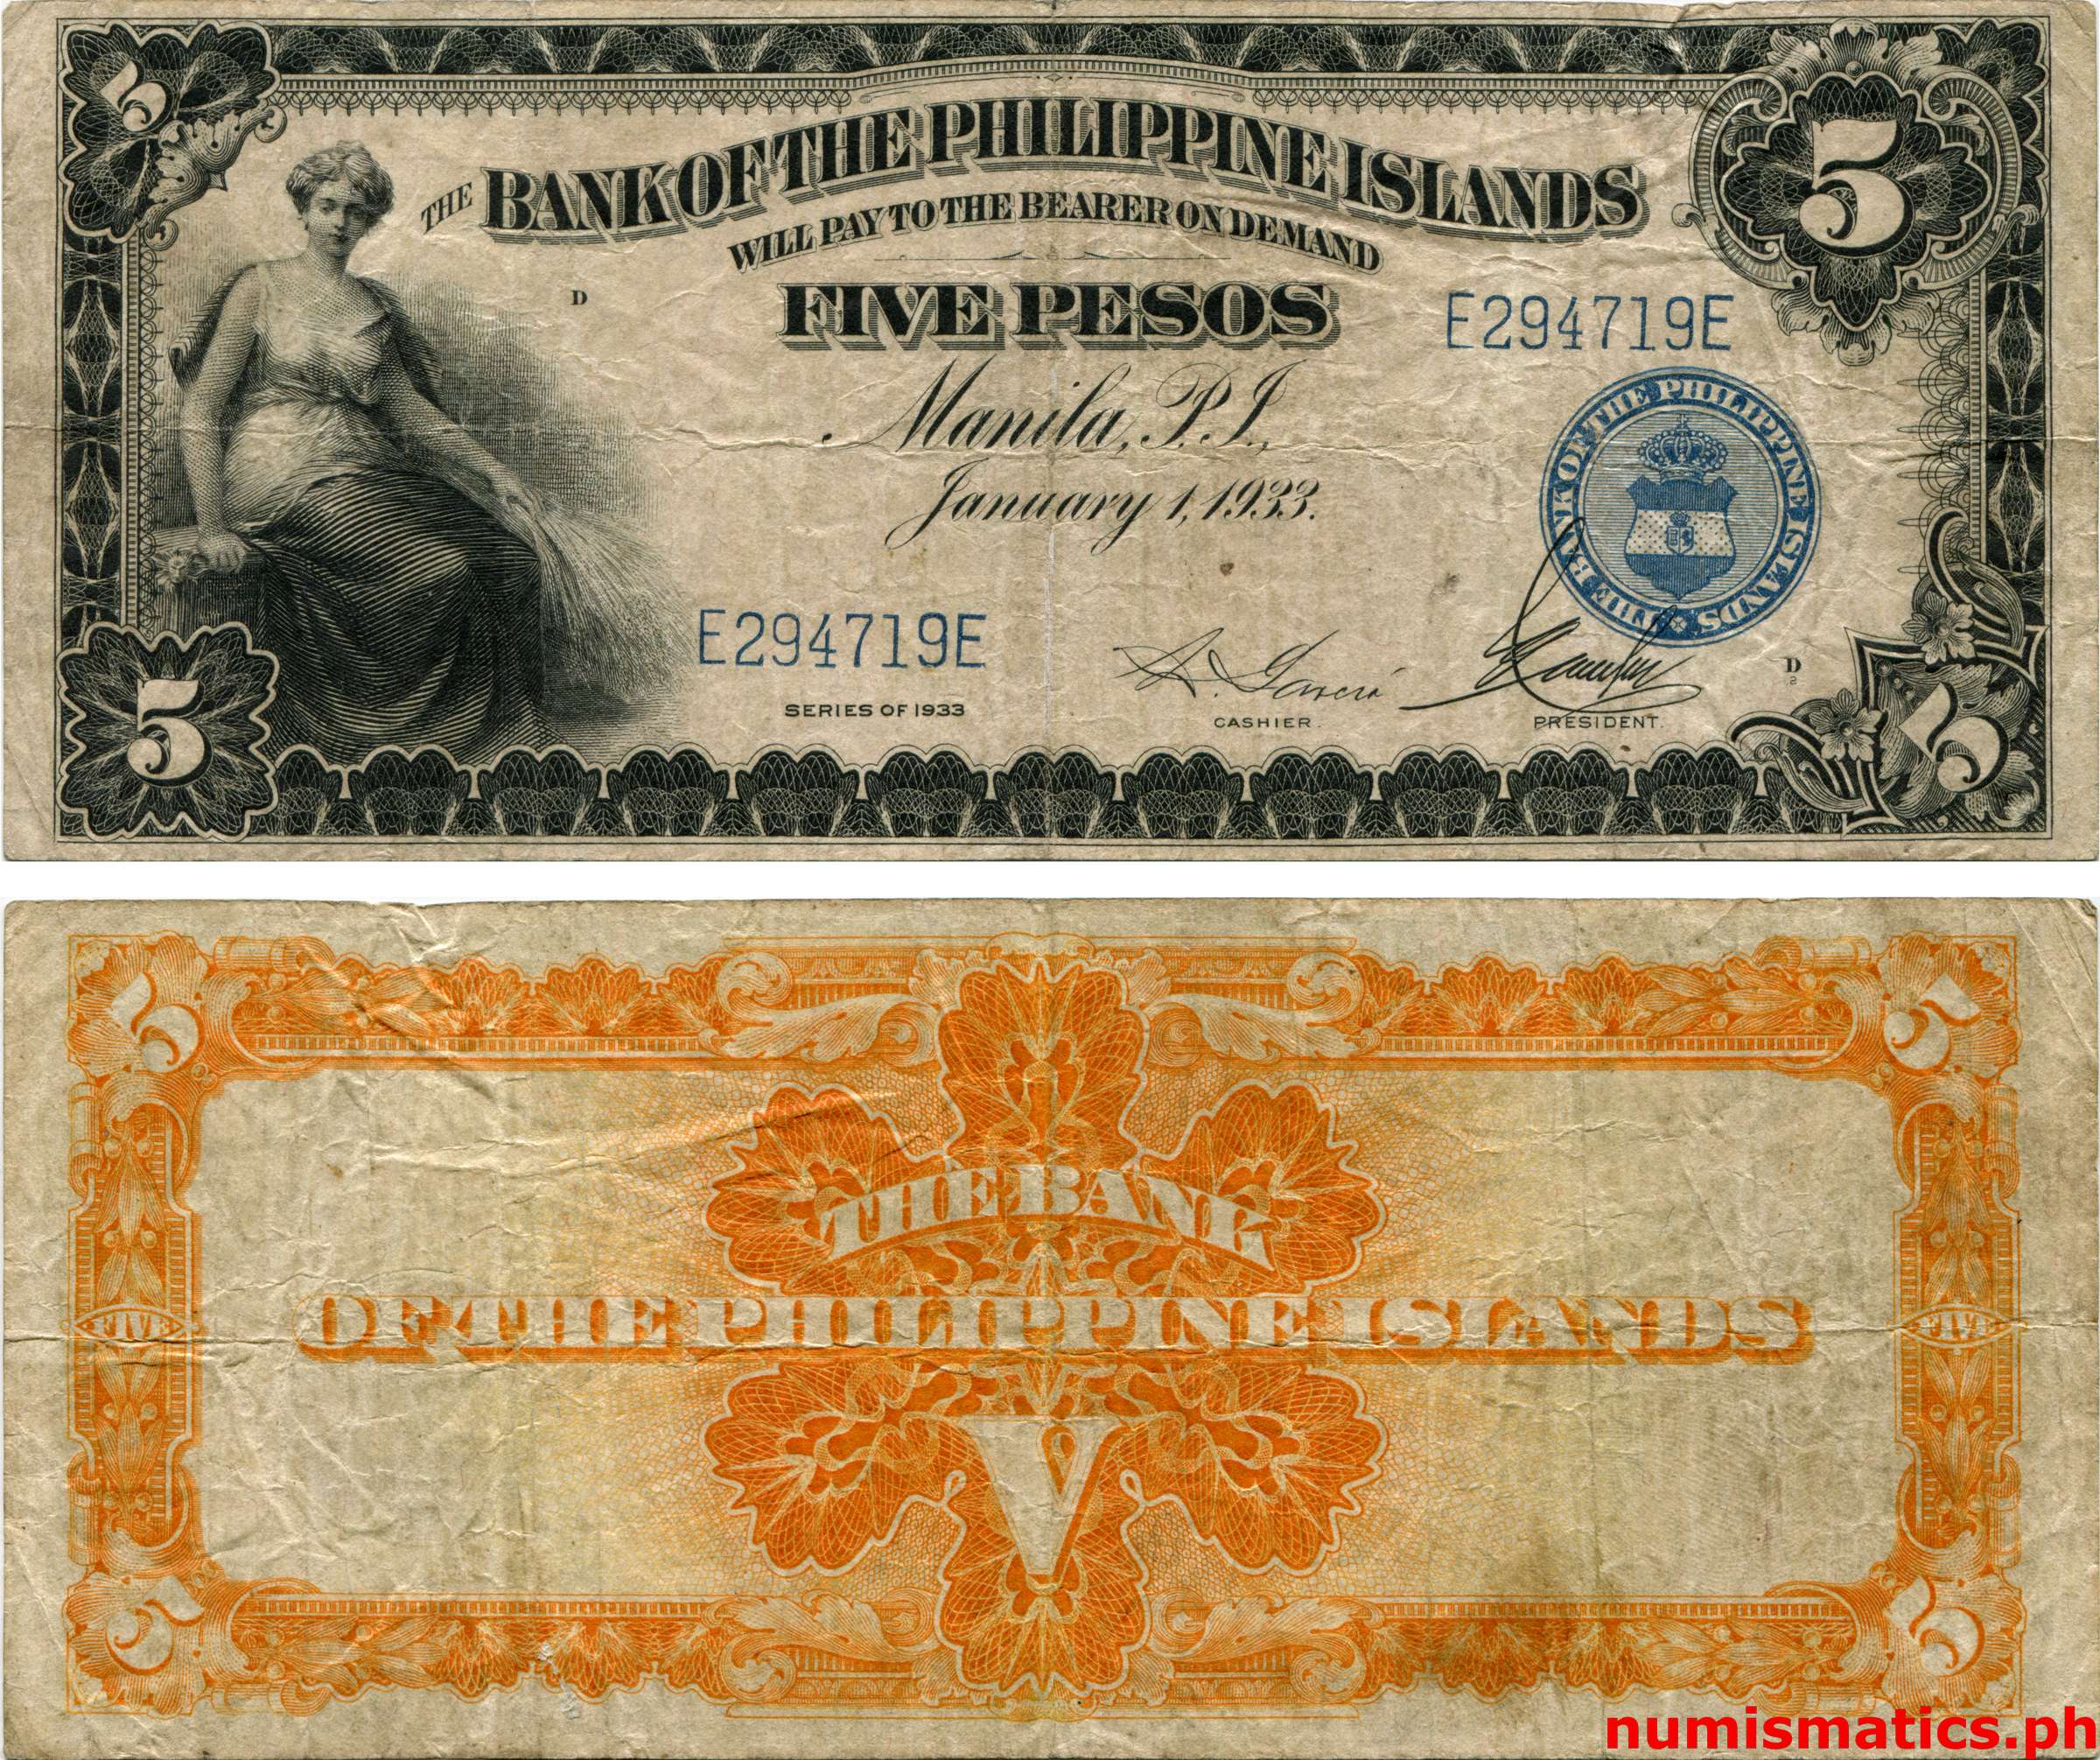 1933 5 Pesos Garcia - Campos Bank of the Philippine Islands Circulating Note